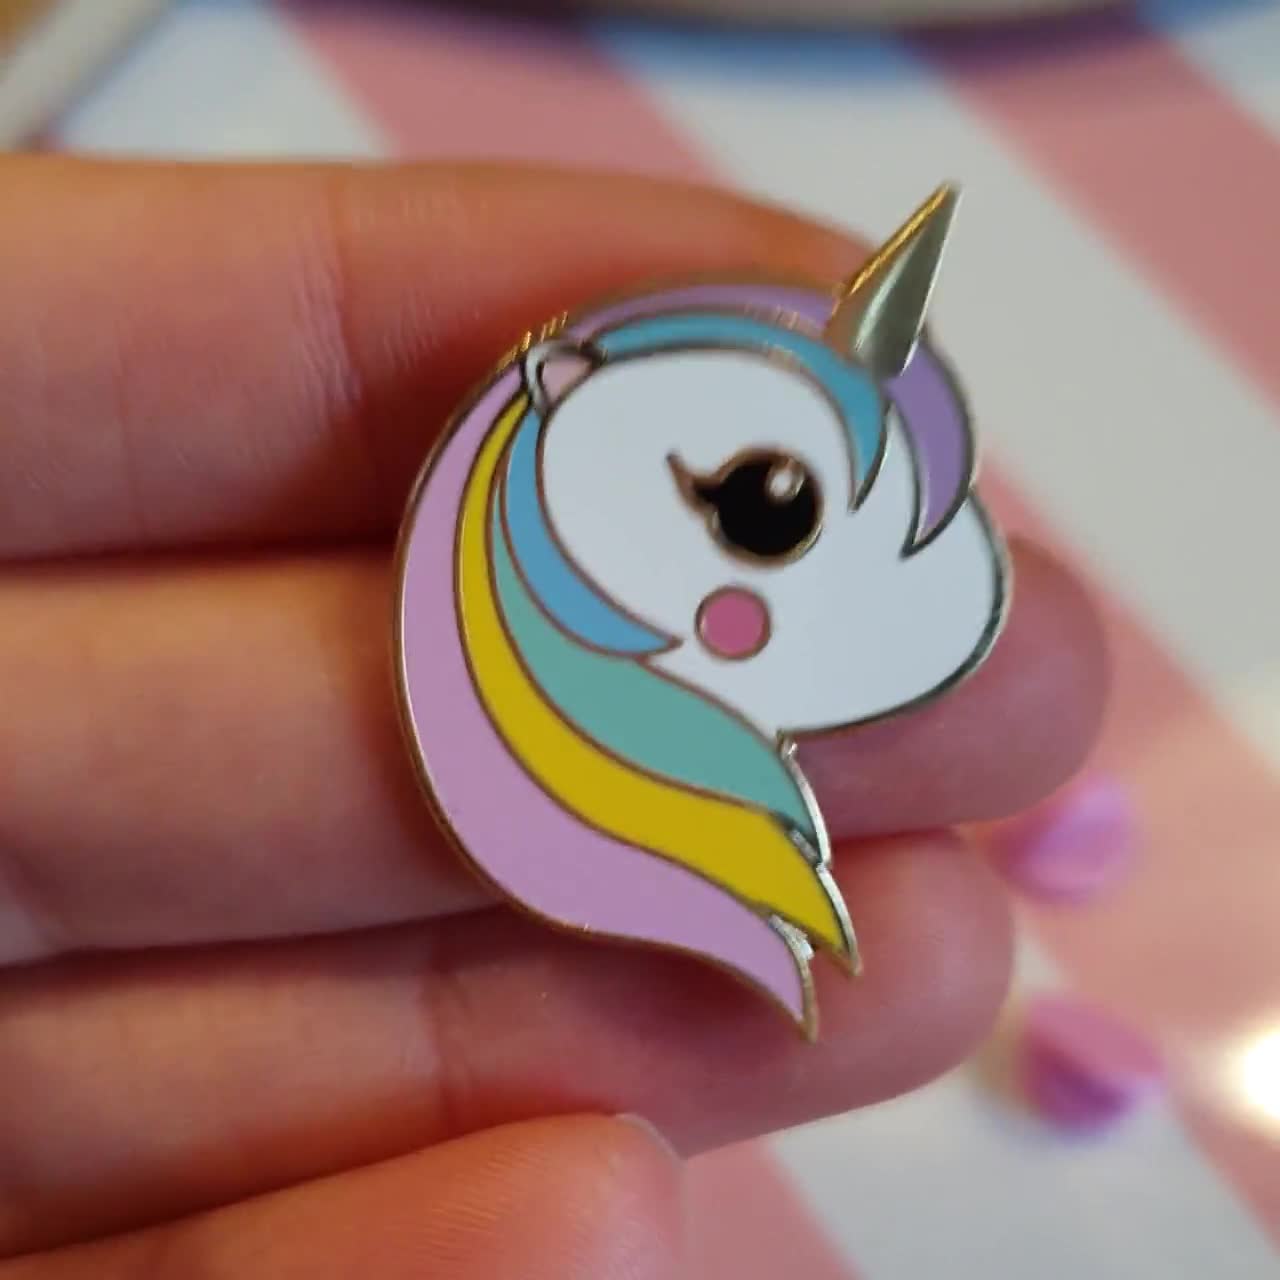 Unicorn rainbow enamel pin badge is a cute kawaii gift for her or